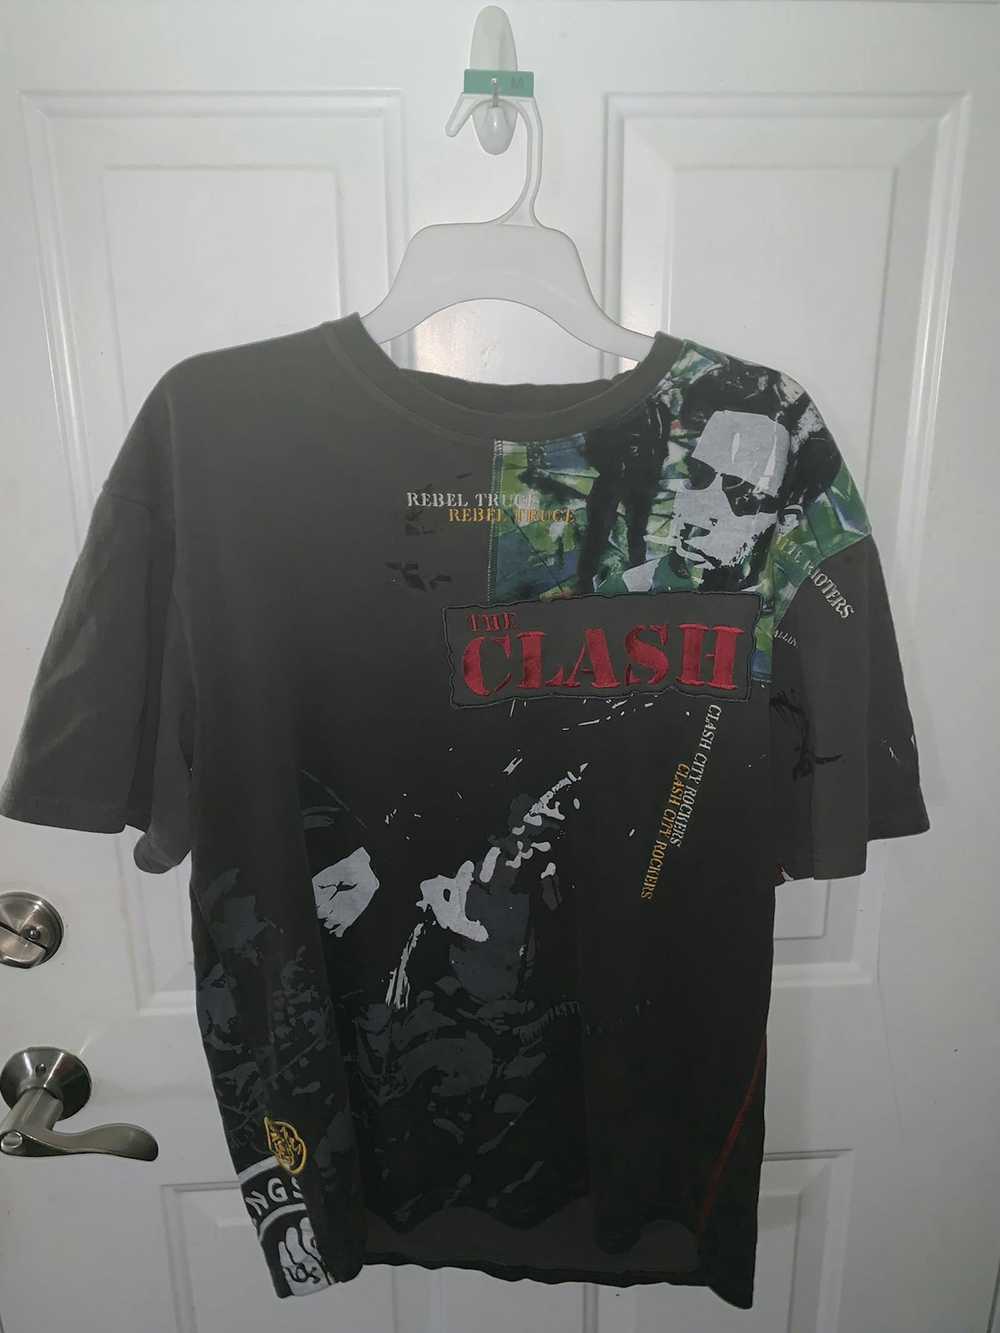 Vintage Vintage The clash shirt - image 1